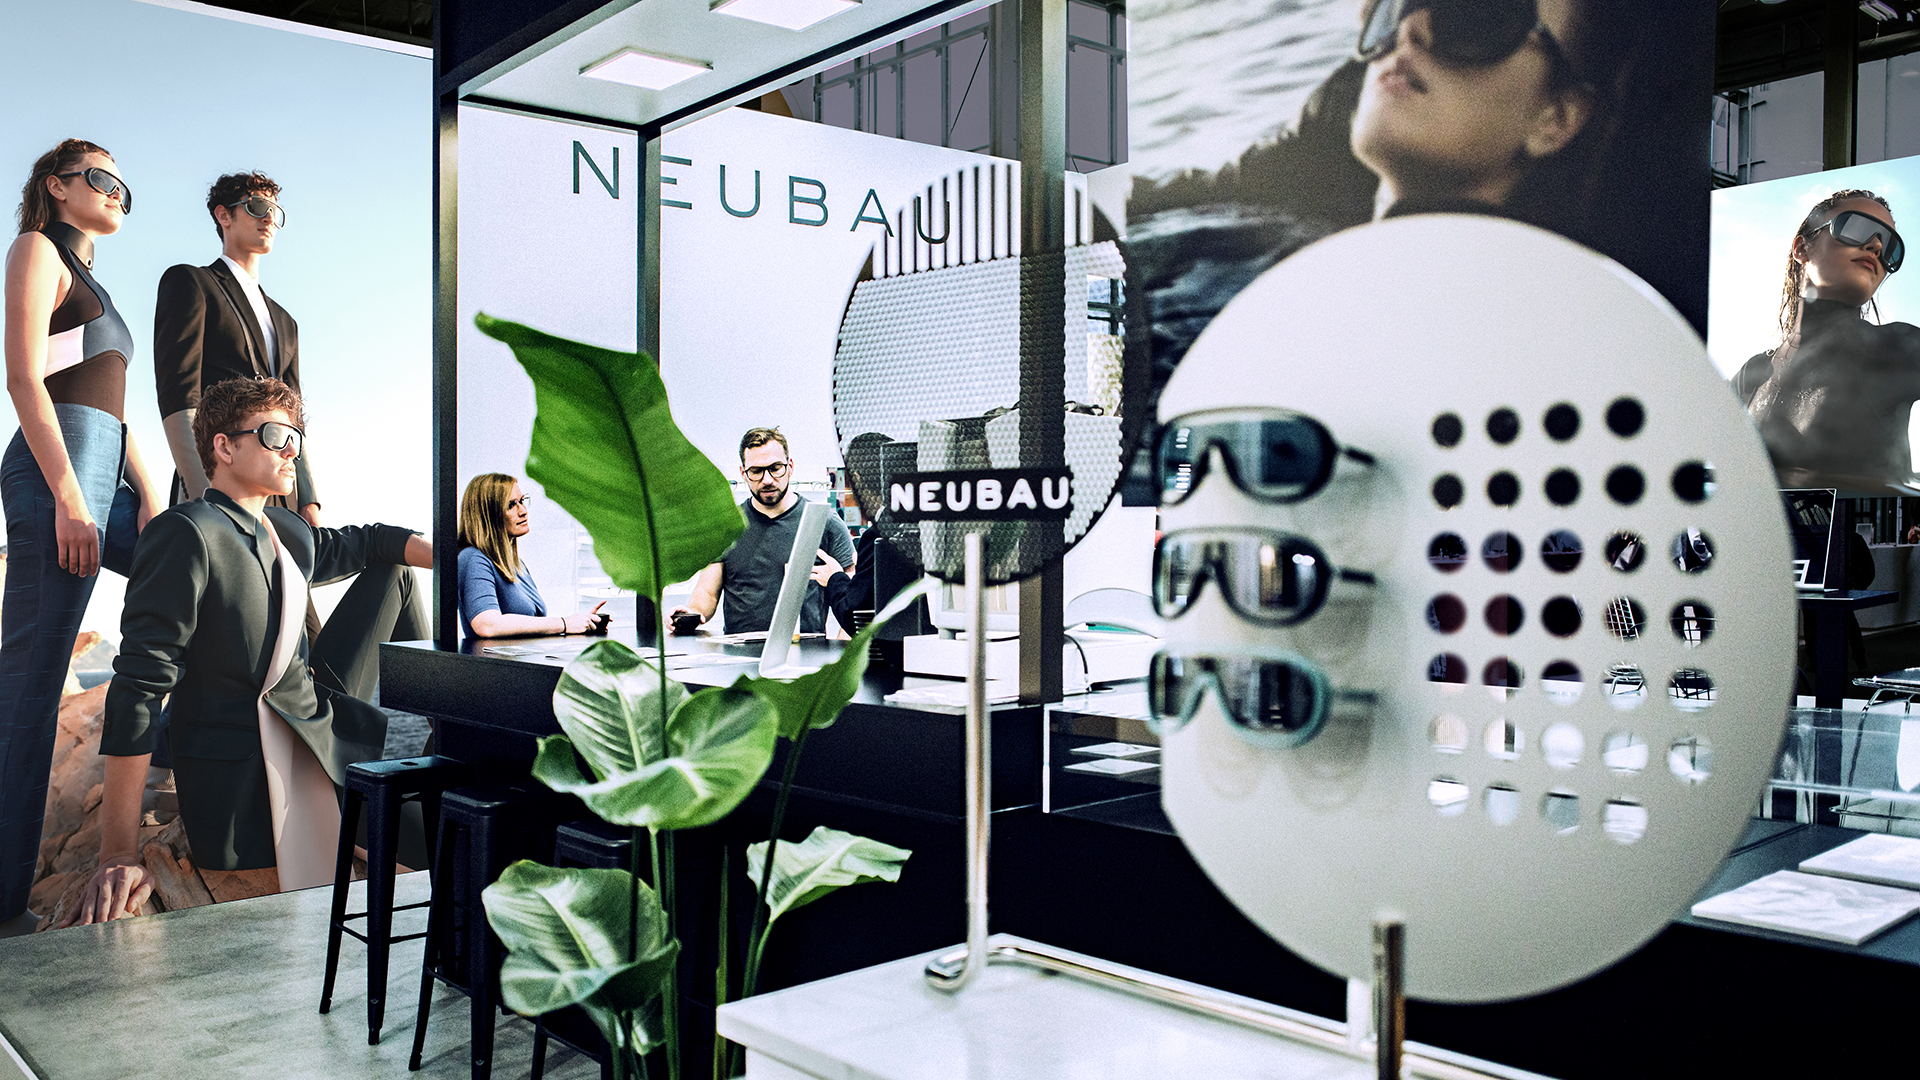 Neubau products displayed on round metal structure